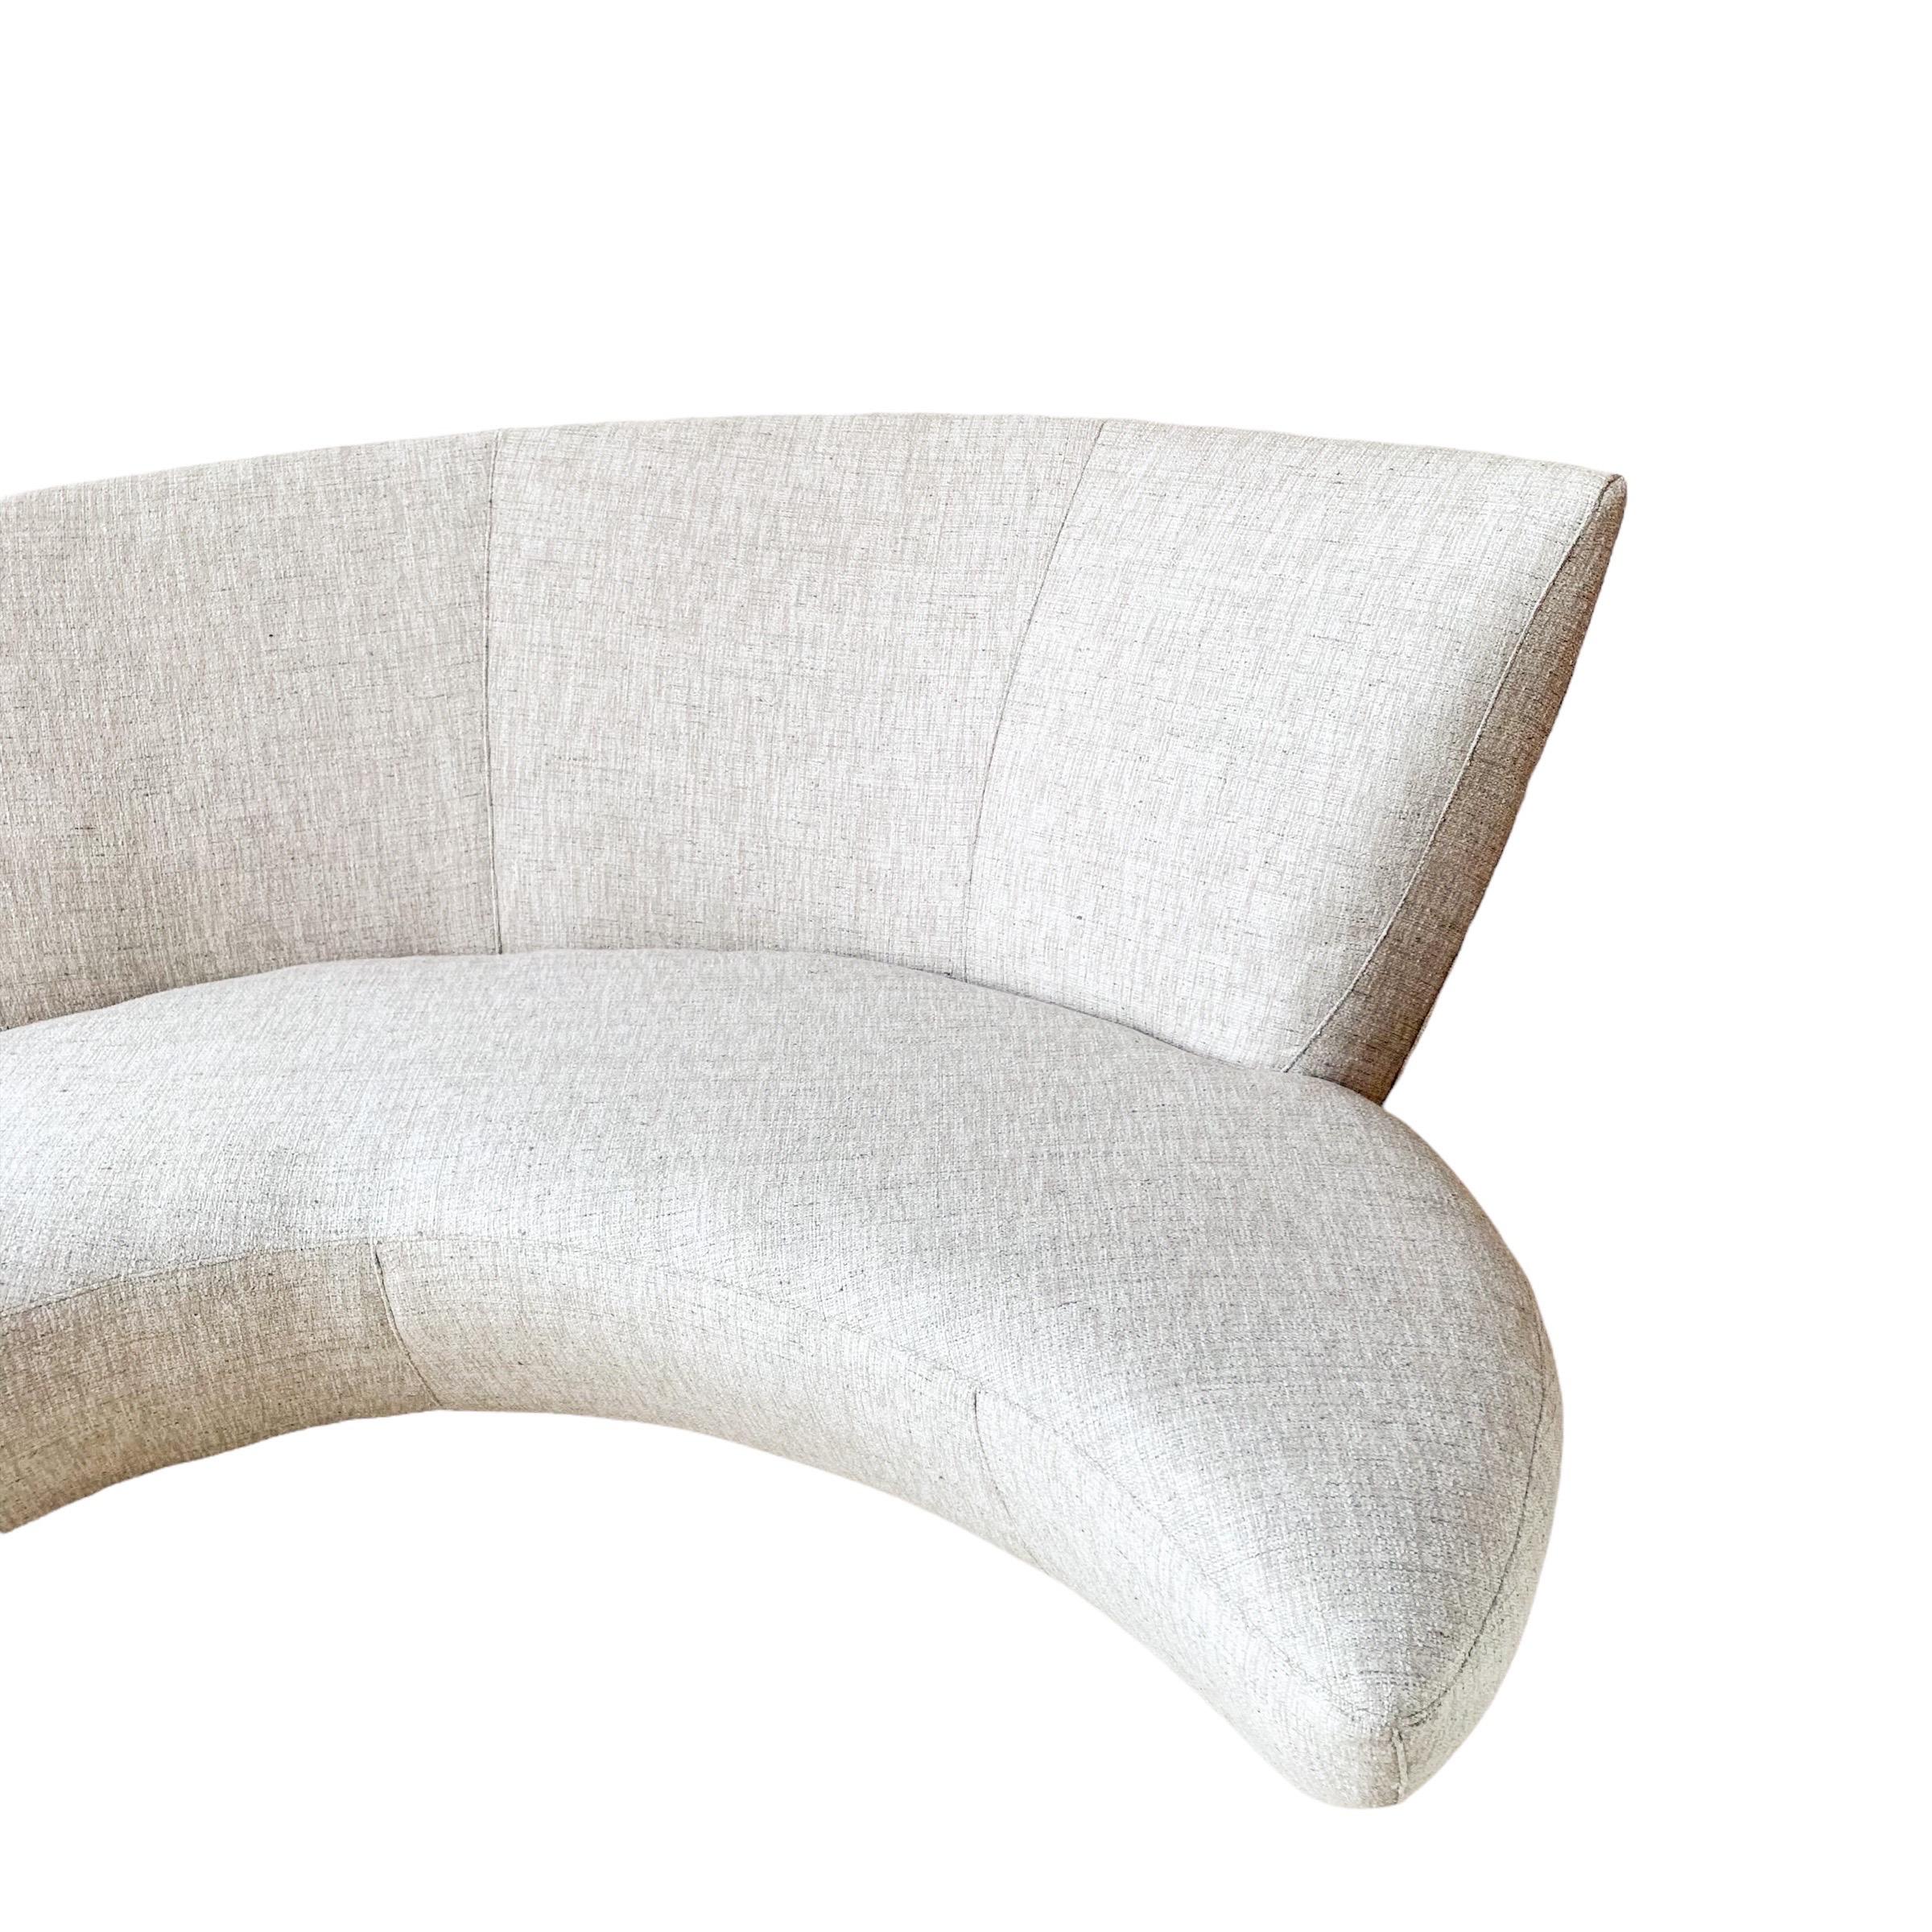 20th Century Mid-Century Modern Style Serpentine Curved Sofa After Vladimir Kagan